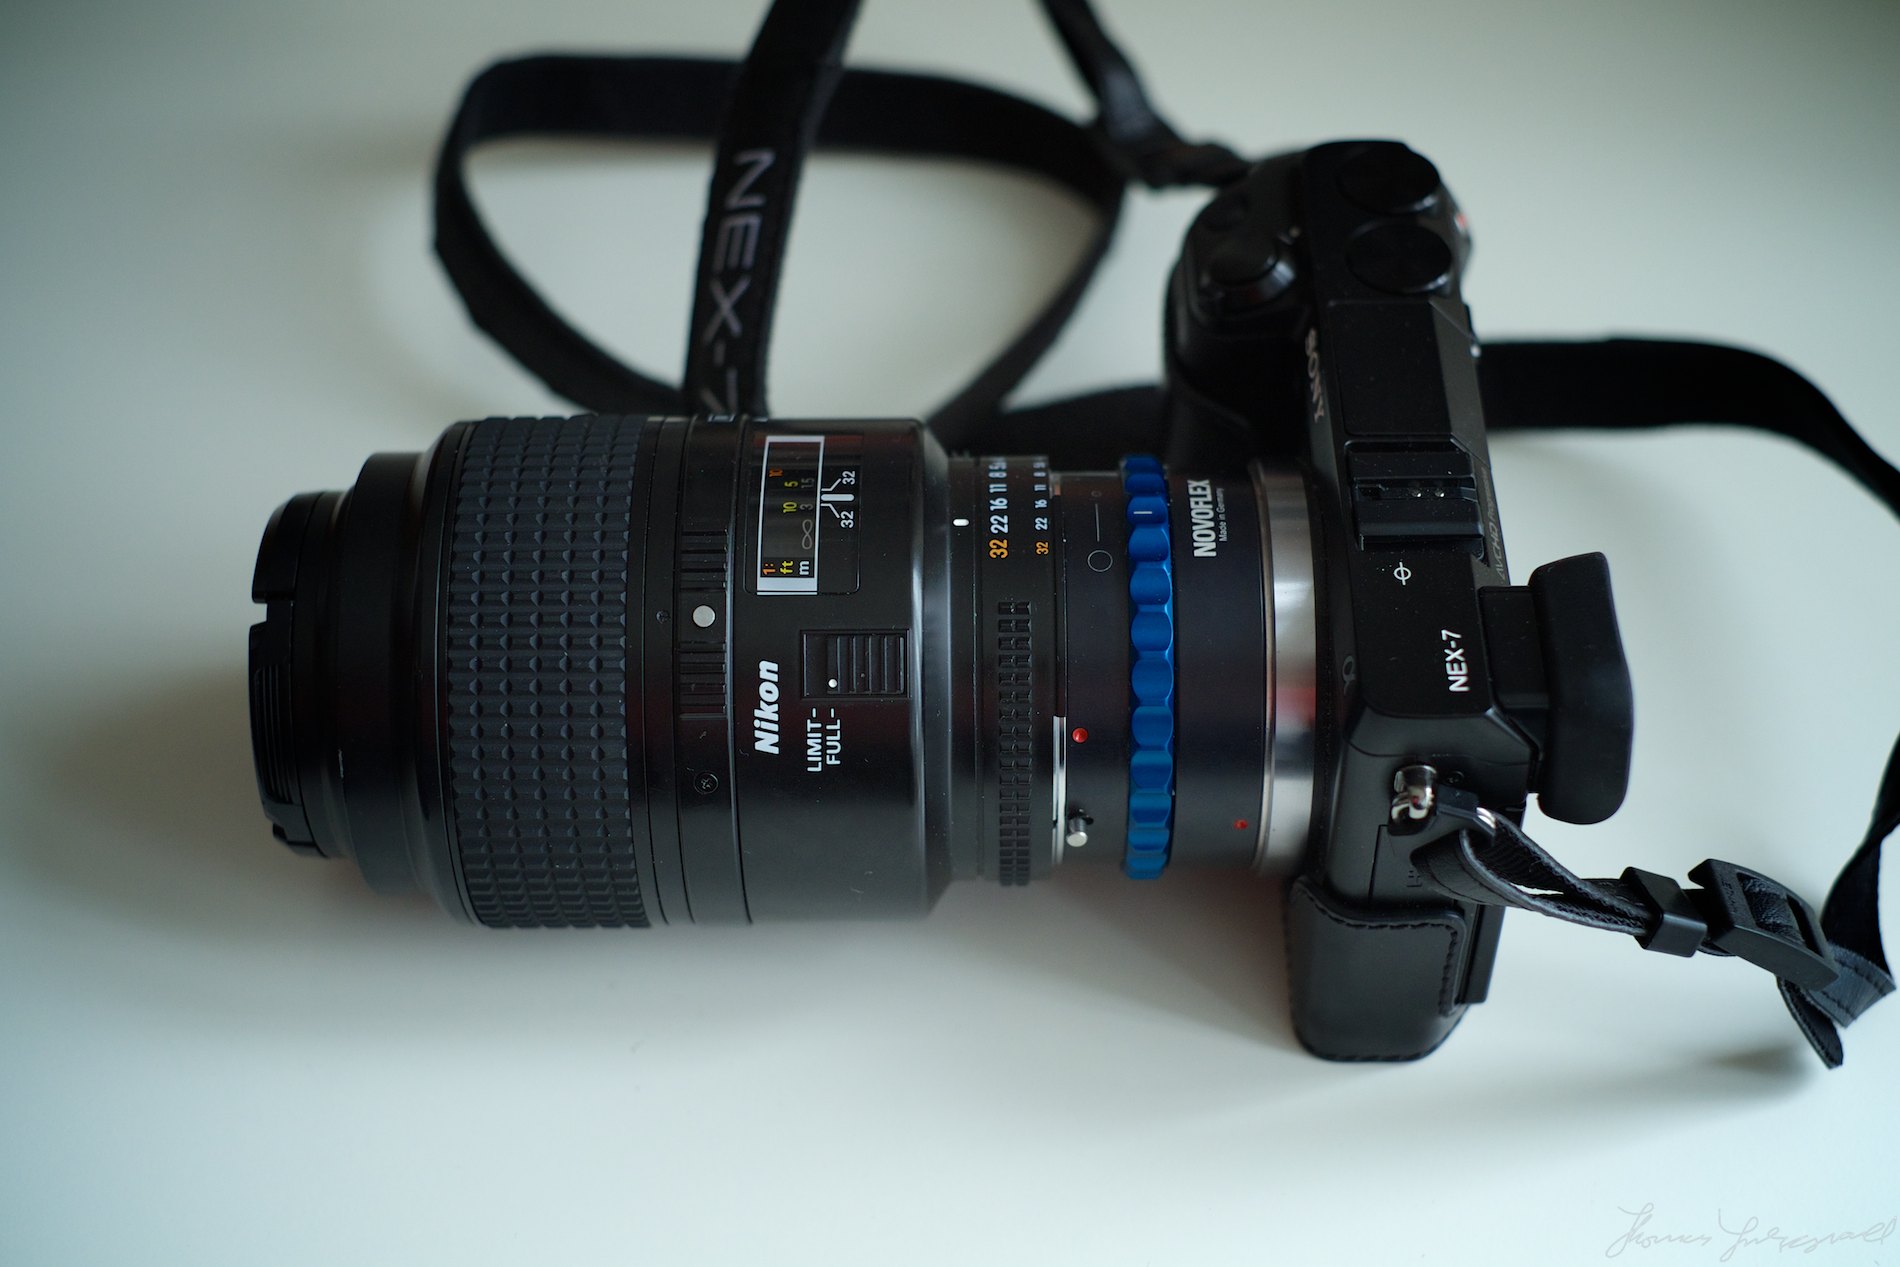 Sony NEX-7 Camera with 18-55mm lens